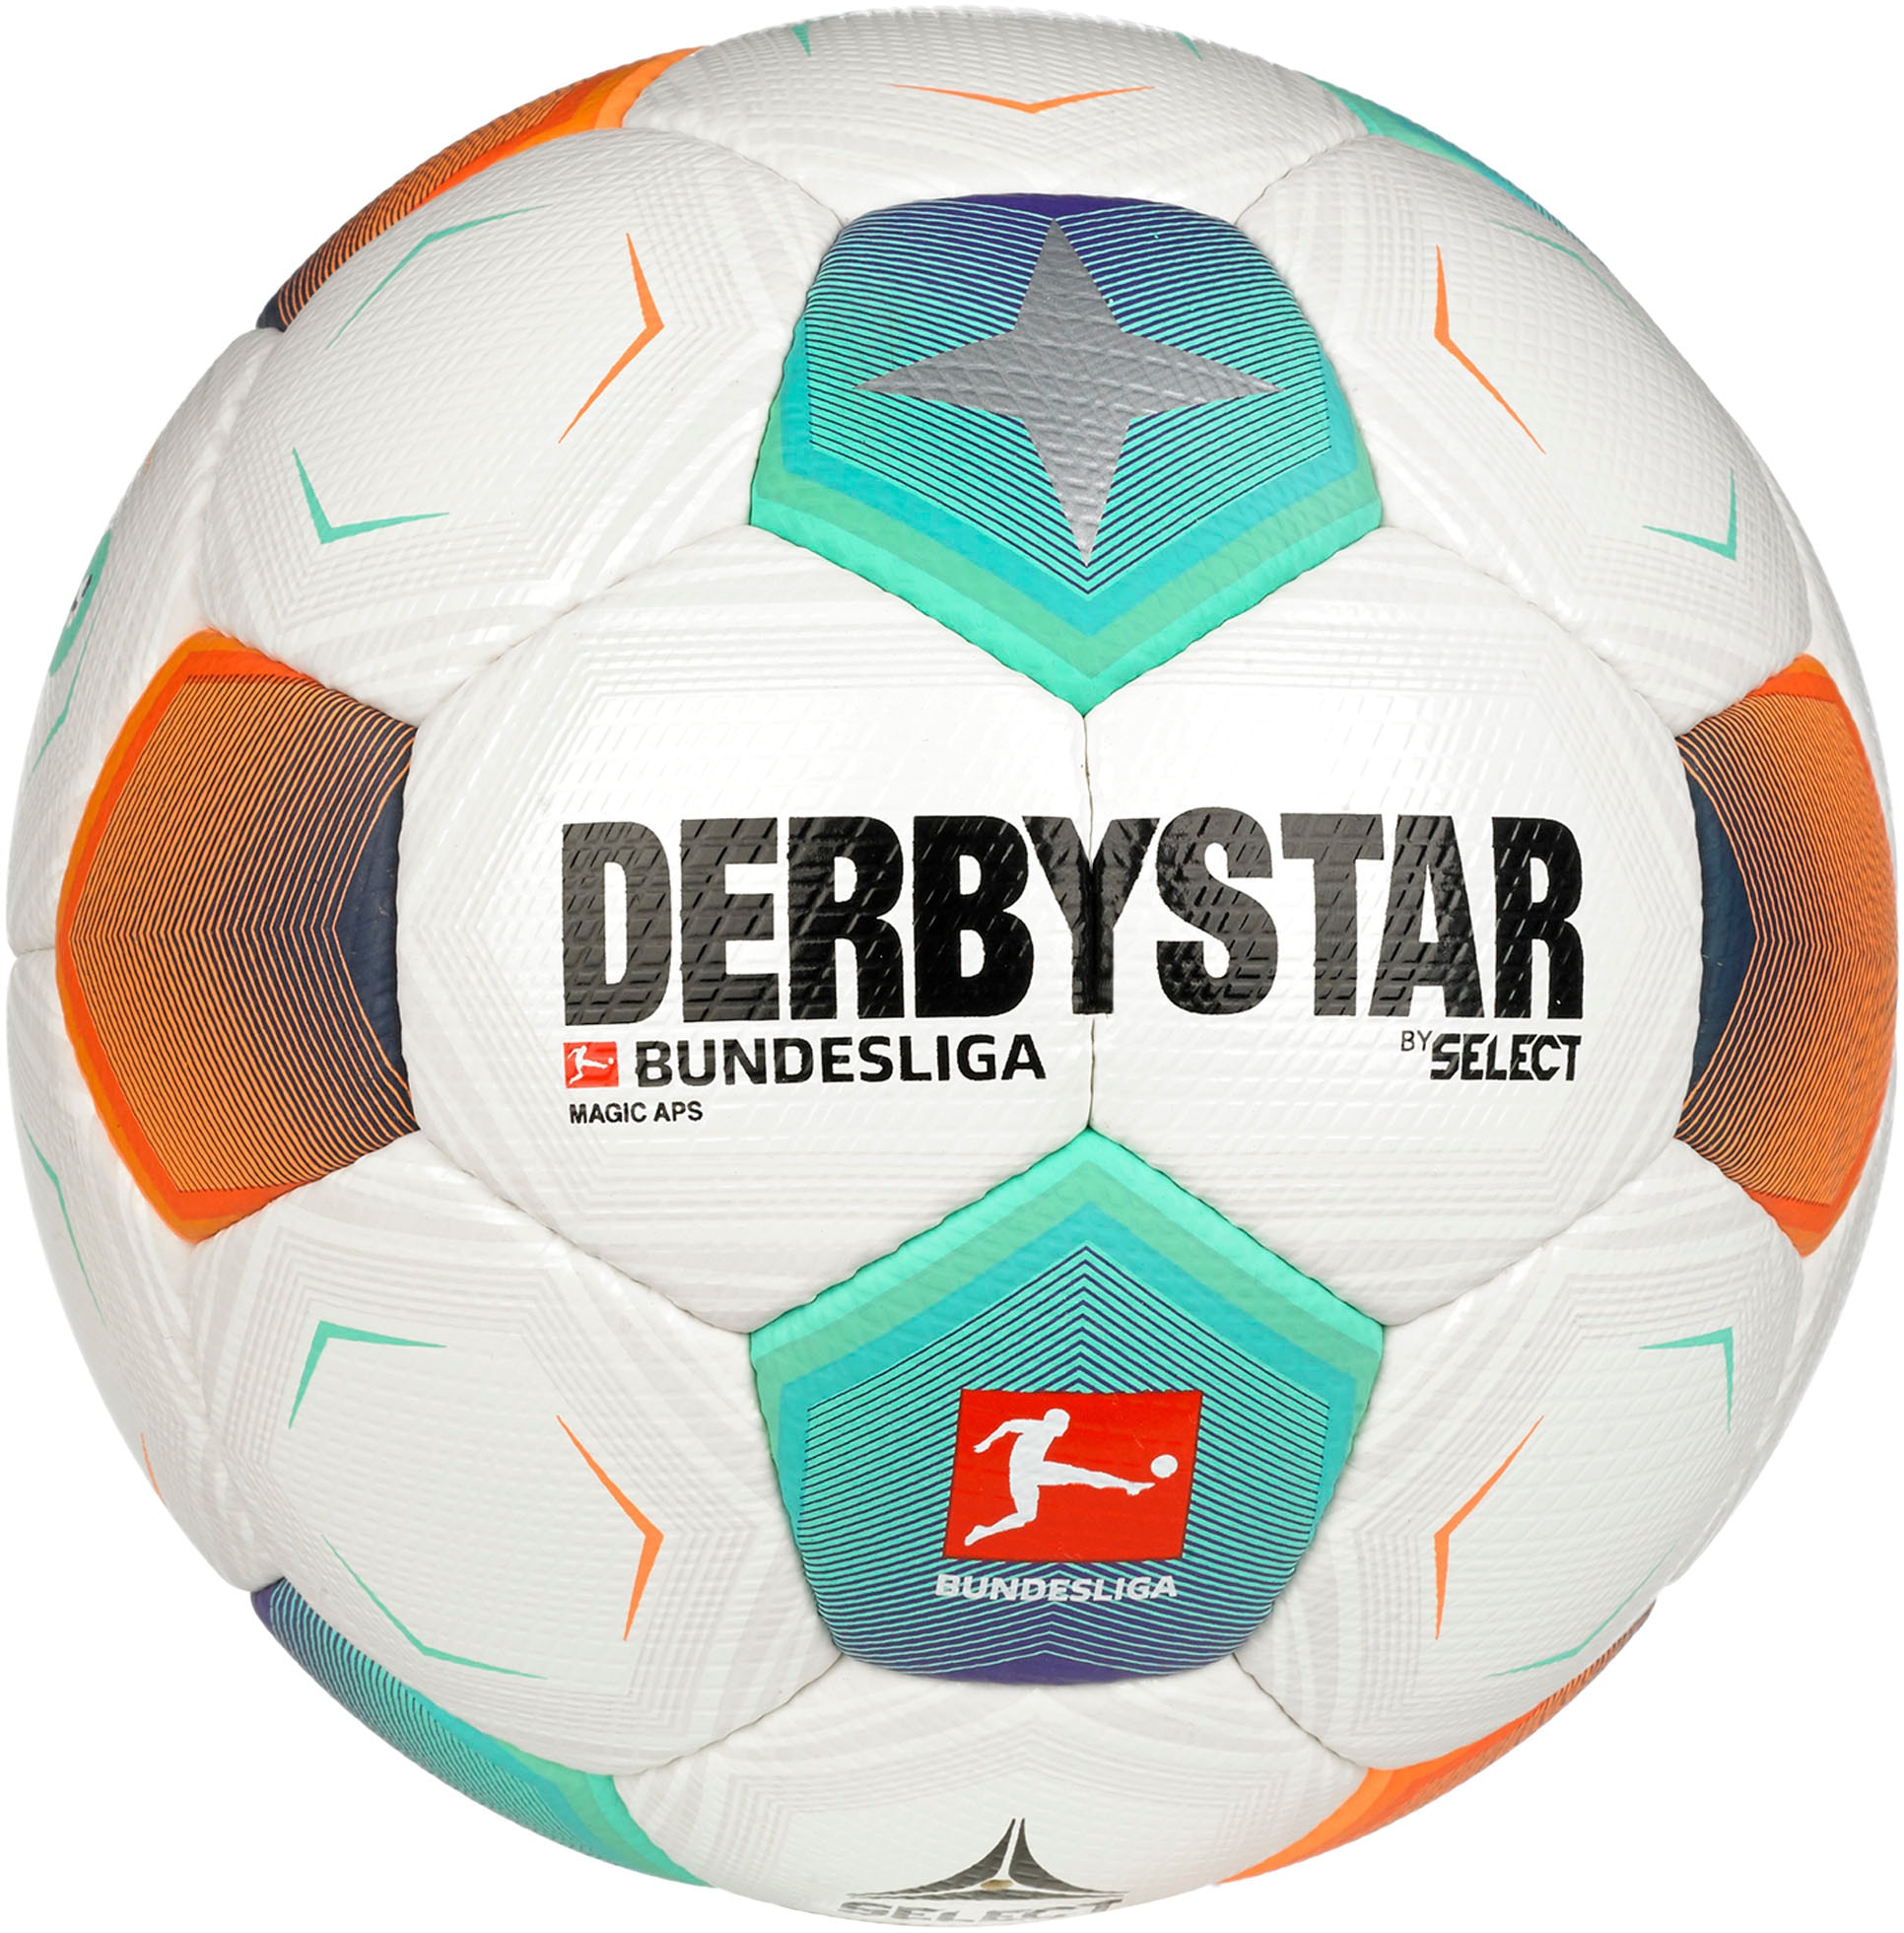 Derbystar Fußball »Bundesliga Magic APS«